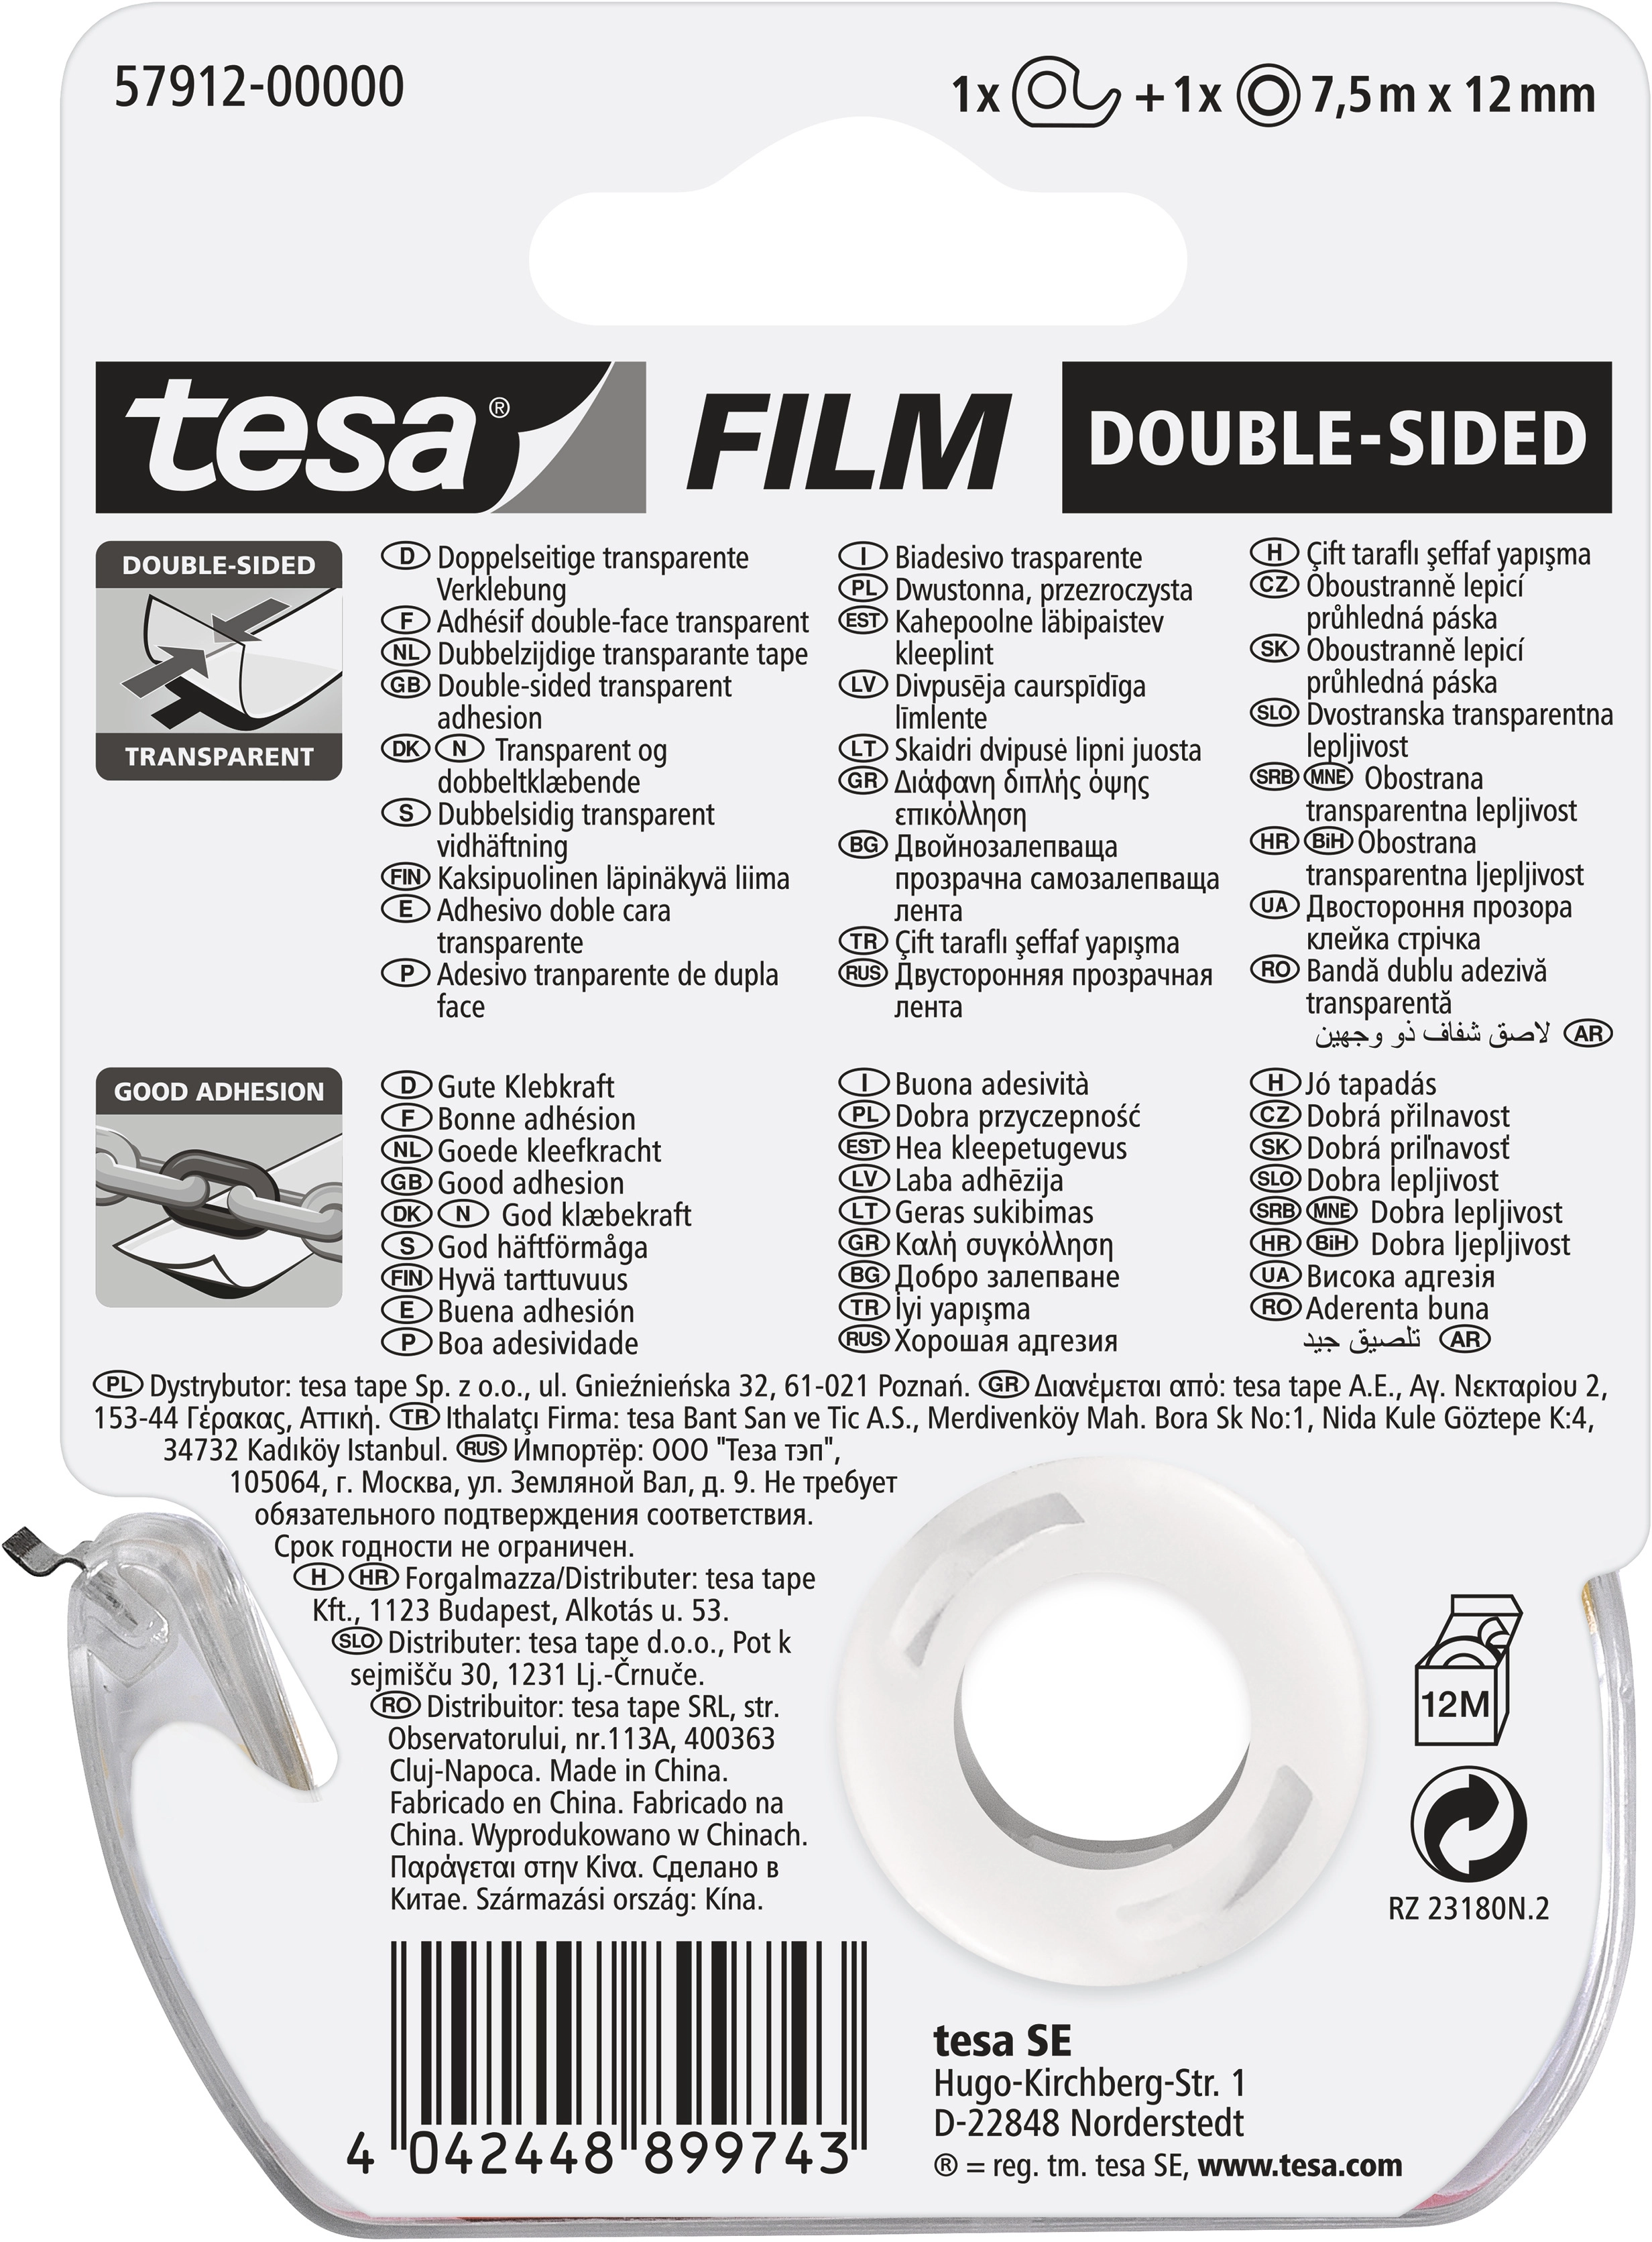 tesa Photo Film 7,5m x 12mm doppelseitig klebend, Film, Tesa